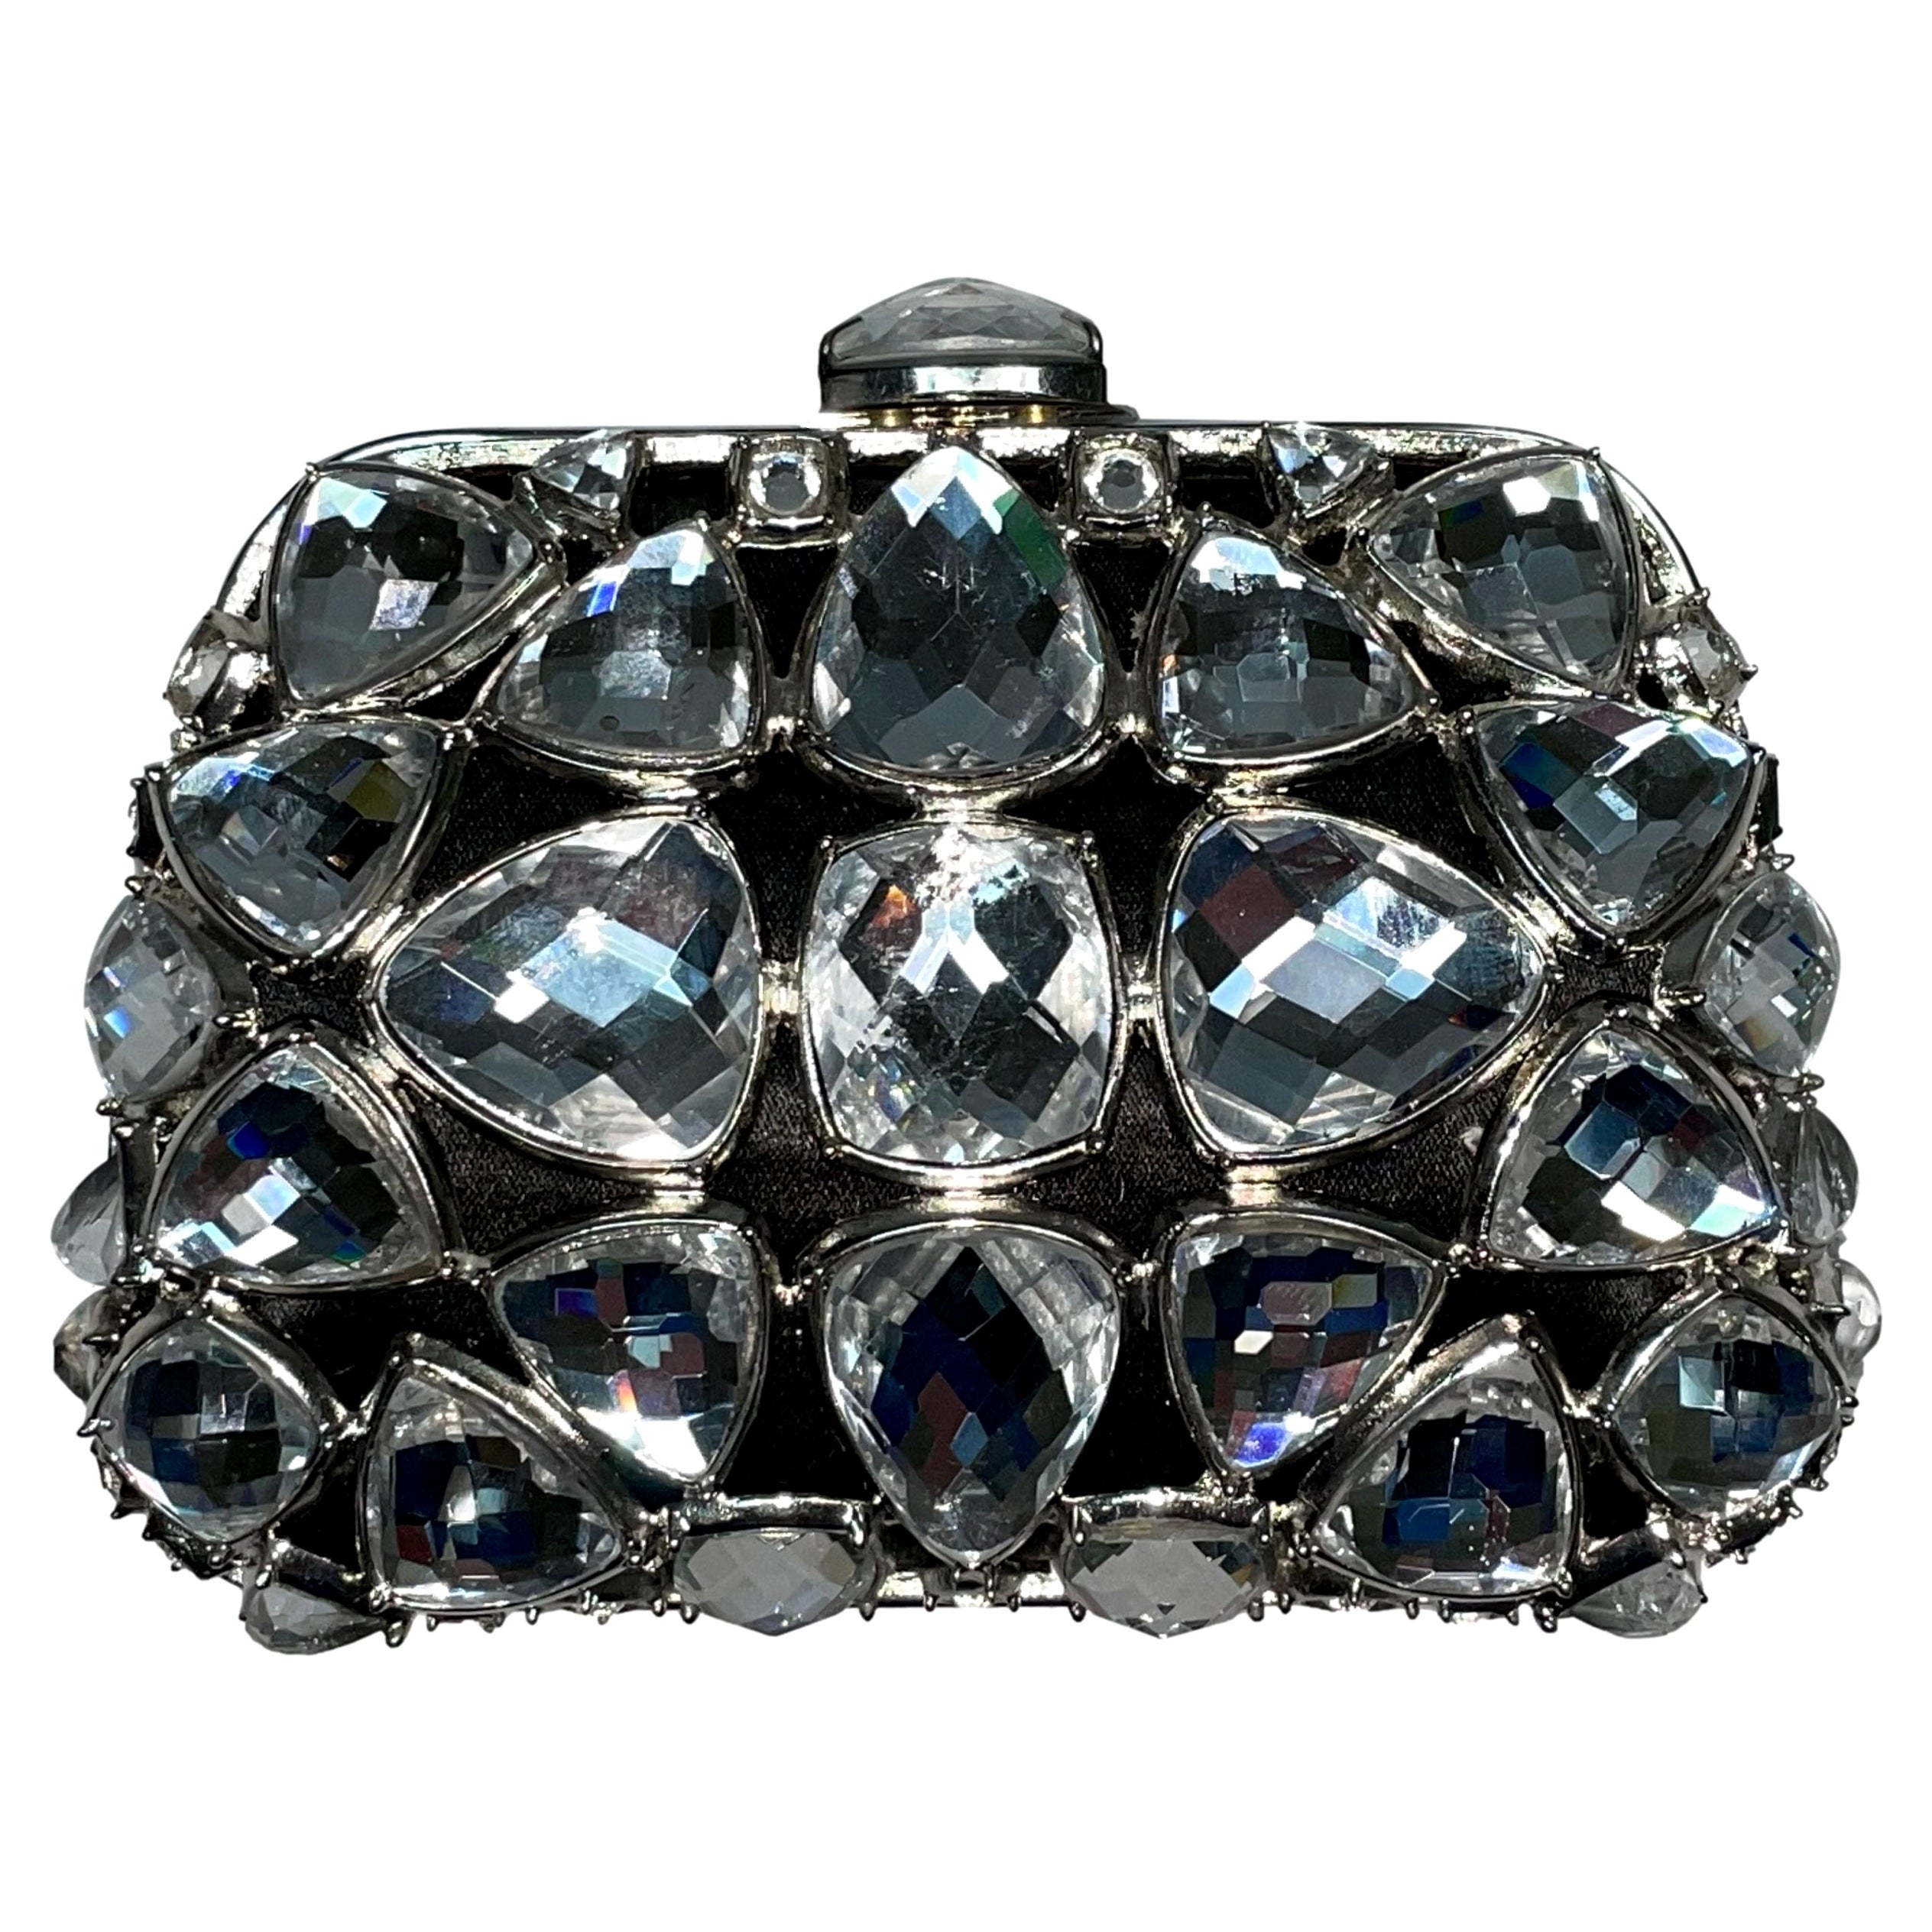 2010 Christian Dior John Galliano Limited Minaudiere Crystal Clutch Handbag